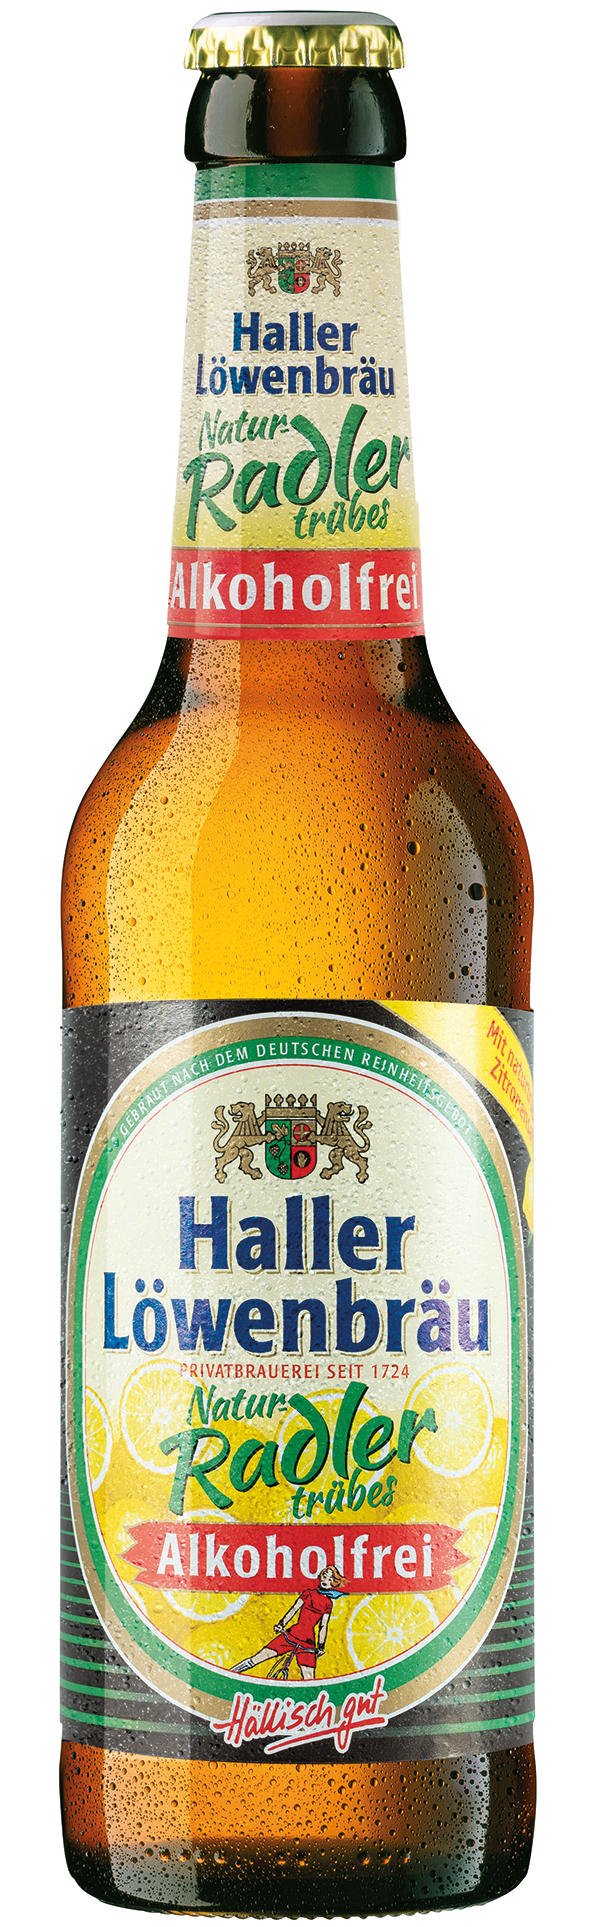 Haller Löwenbräu Natur Radler trübes Alkoholfrei 6x0,33 l